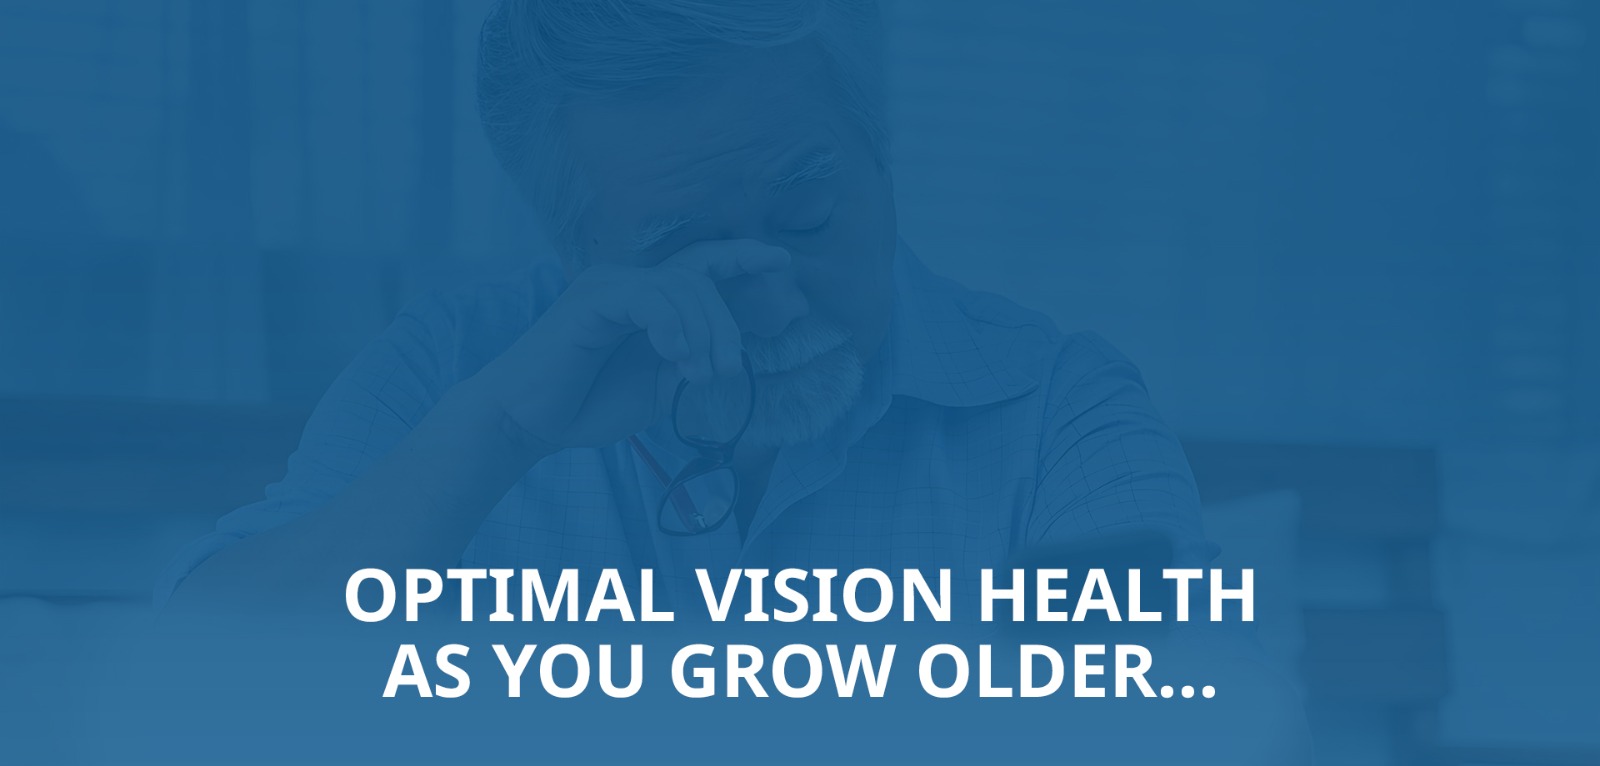 Optimal vision health as you grow older